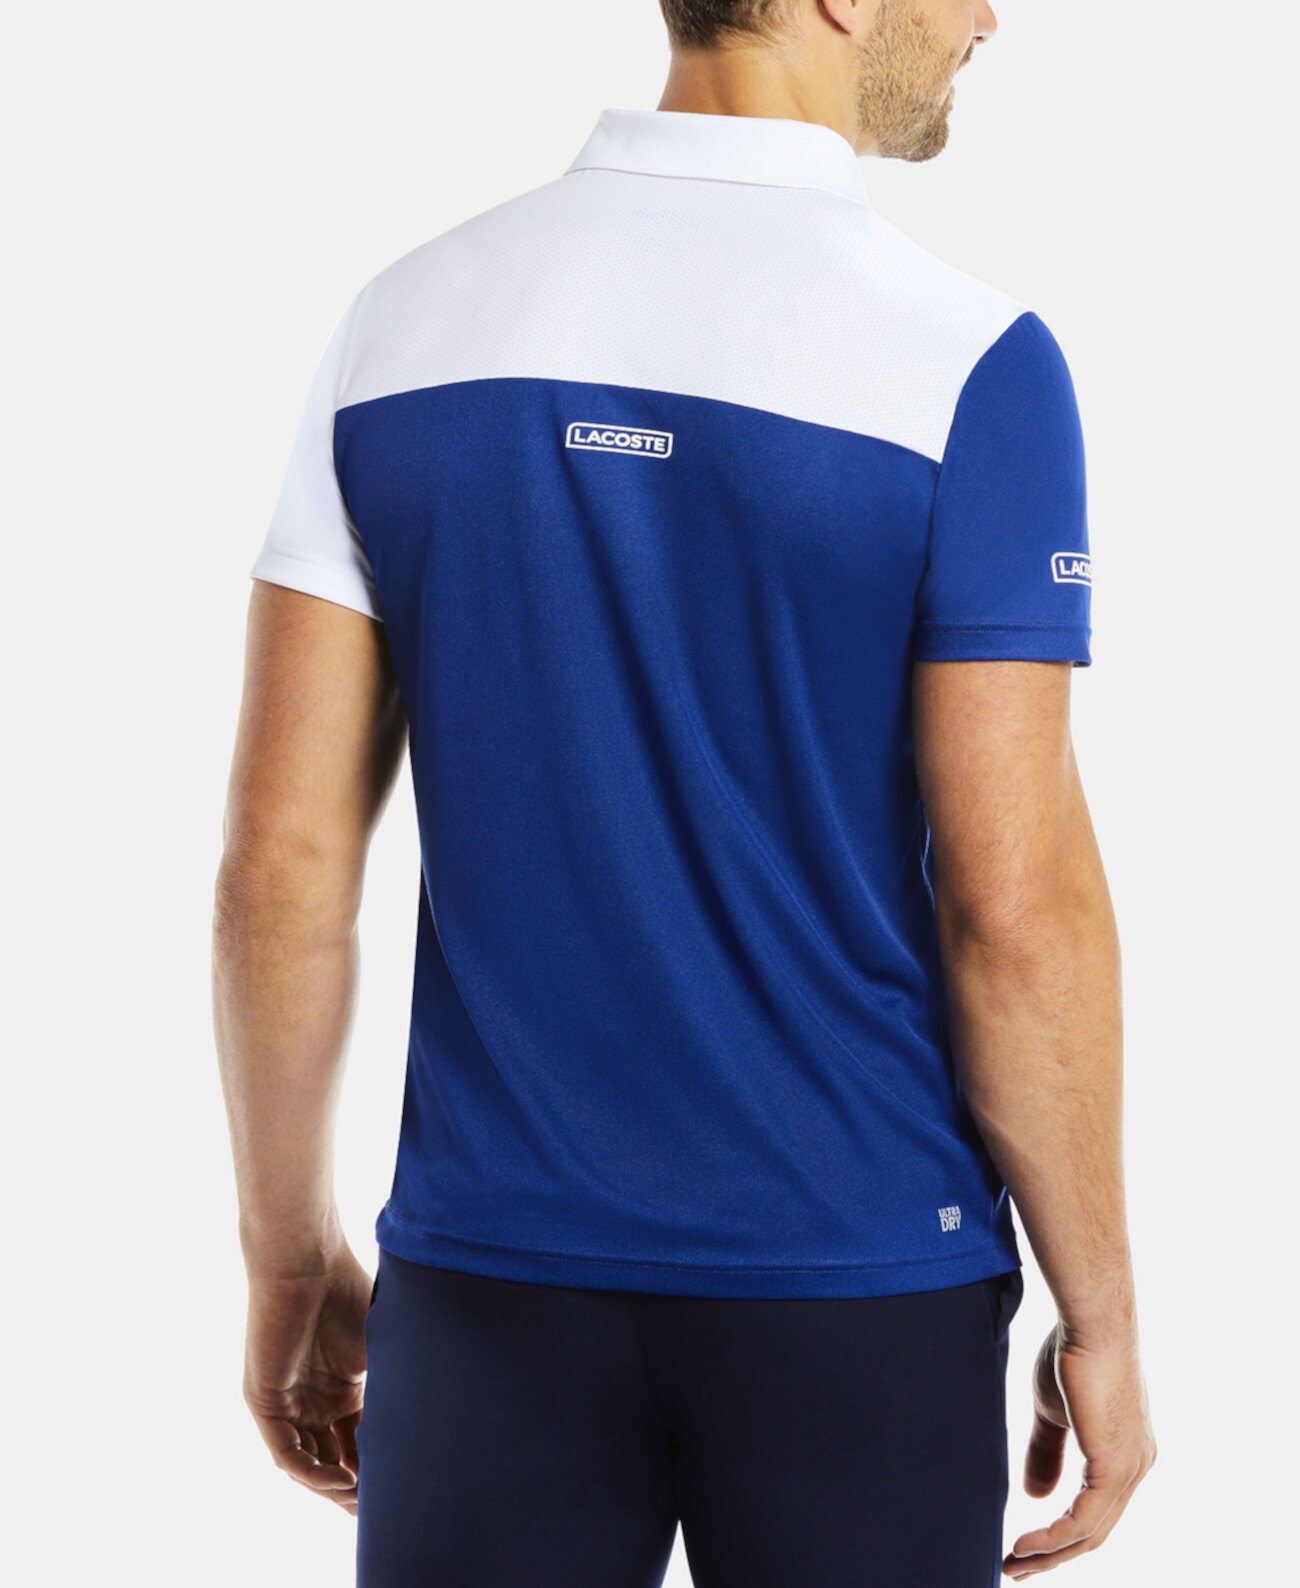 Men's SPORT Short Sleeve Asymmetrical Colorblocked Ultra Dry Polo Shirt Lacoste